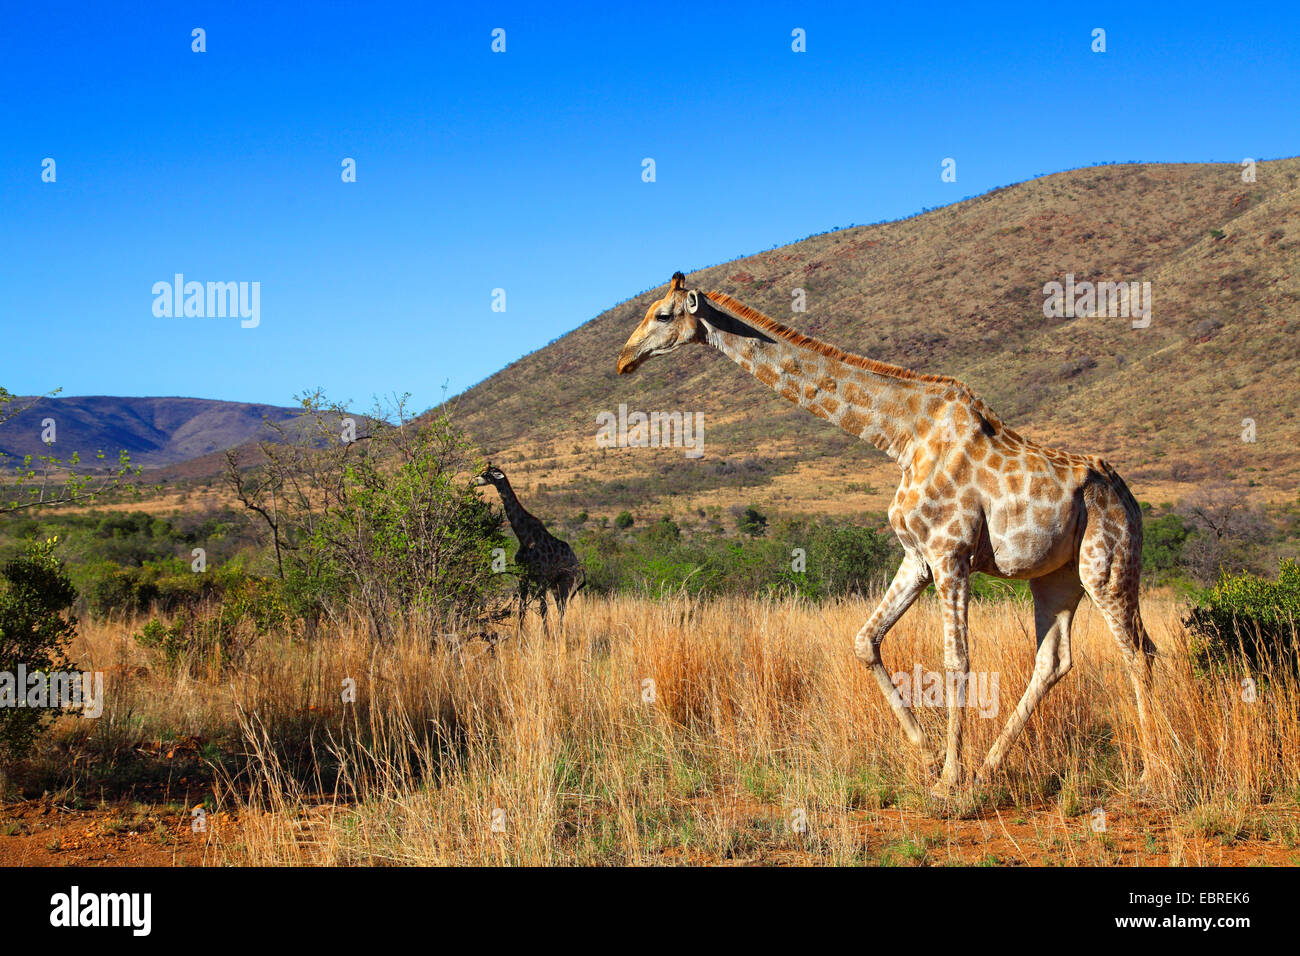 giraffe (Giraffa camelopardalis), walking in grassland, South Africa, North West Province, Pilanesberg National Park Stock Photo